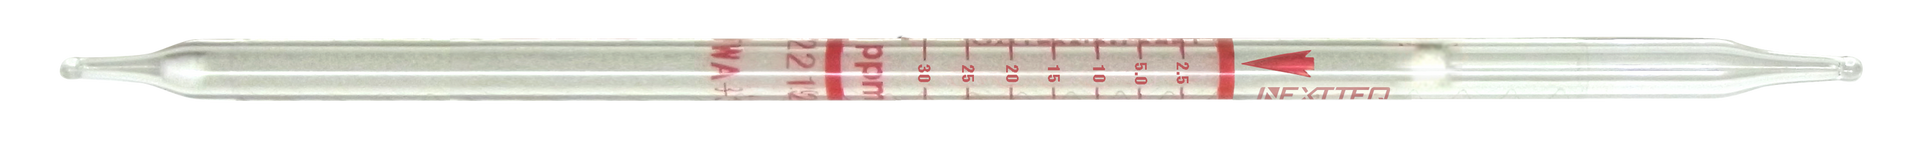 An Inline Sampling Tube for testing LP-gas.